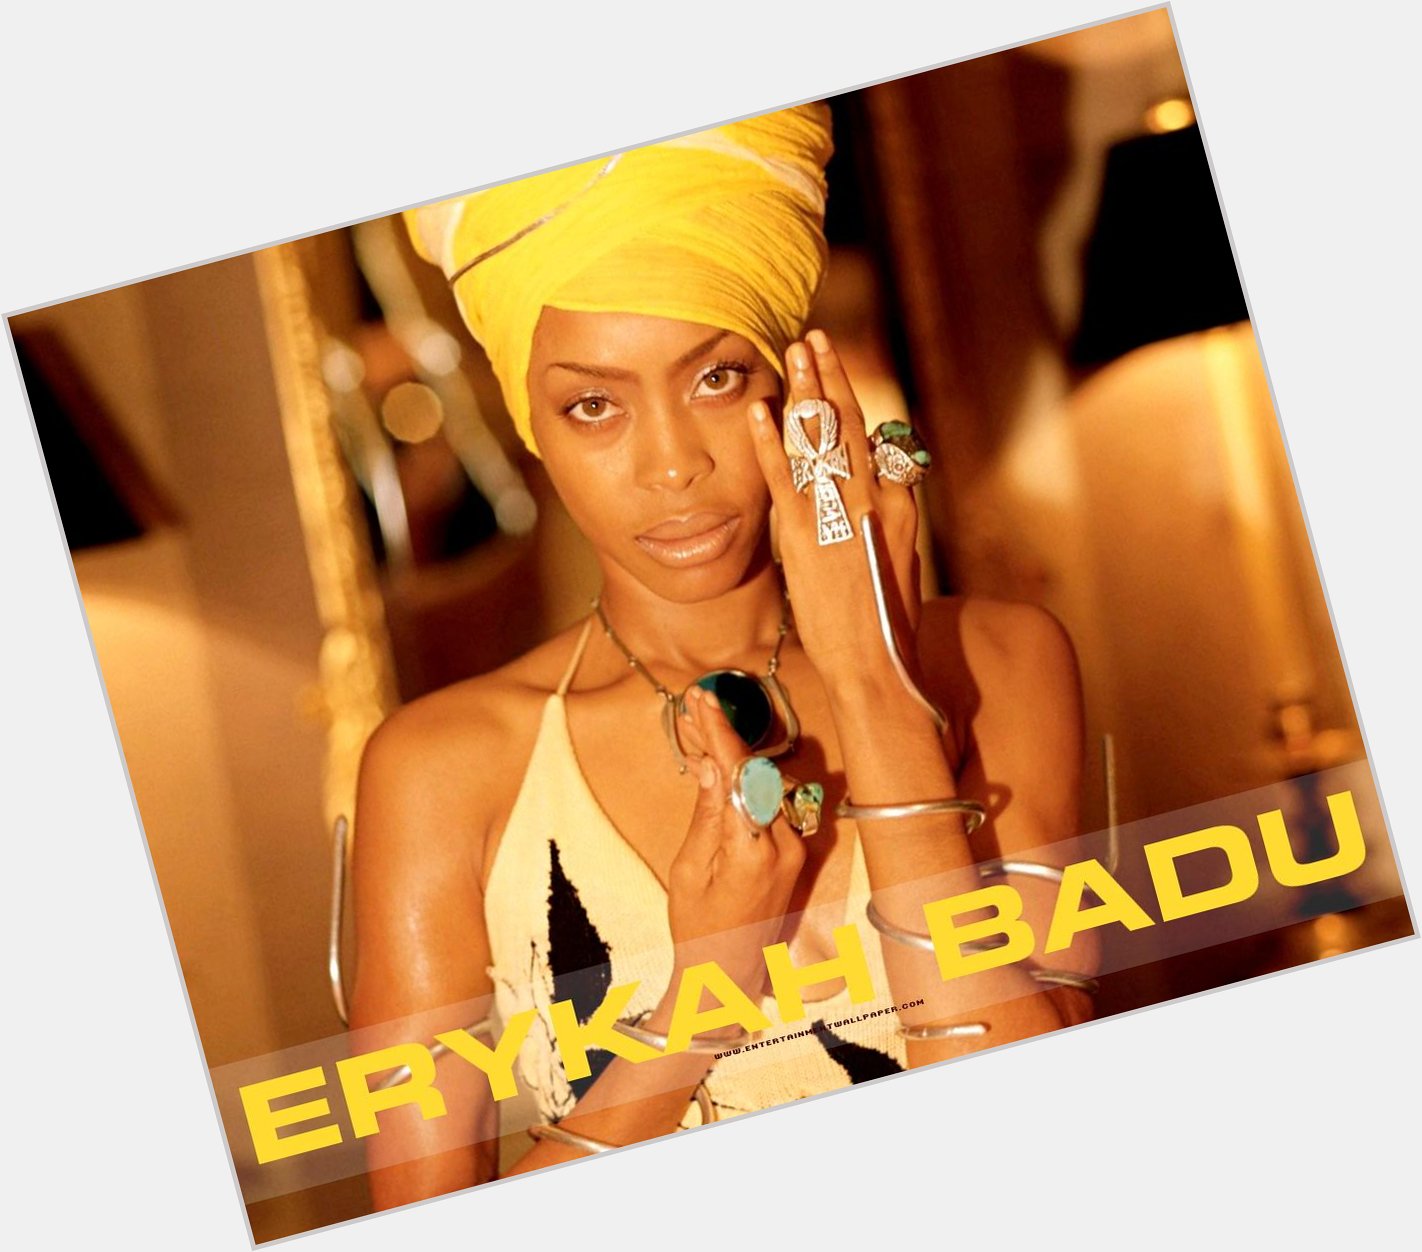 Happy Birthday to Erykah Badu, who turns 44 today! 